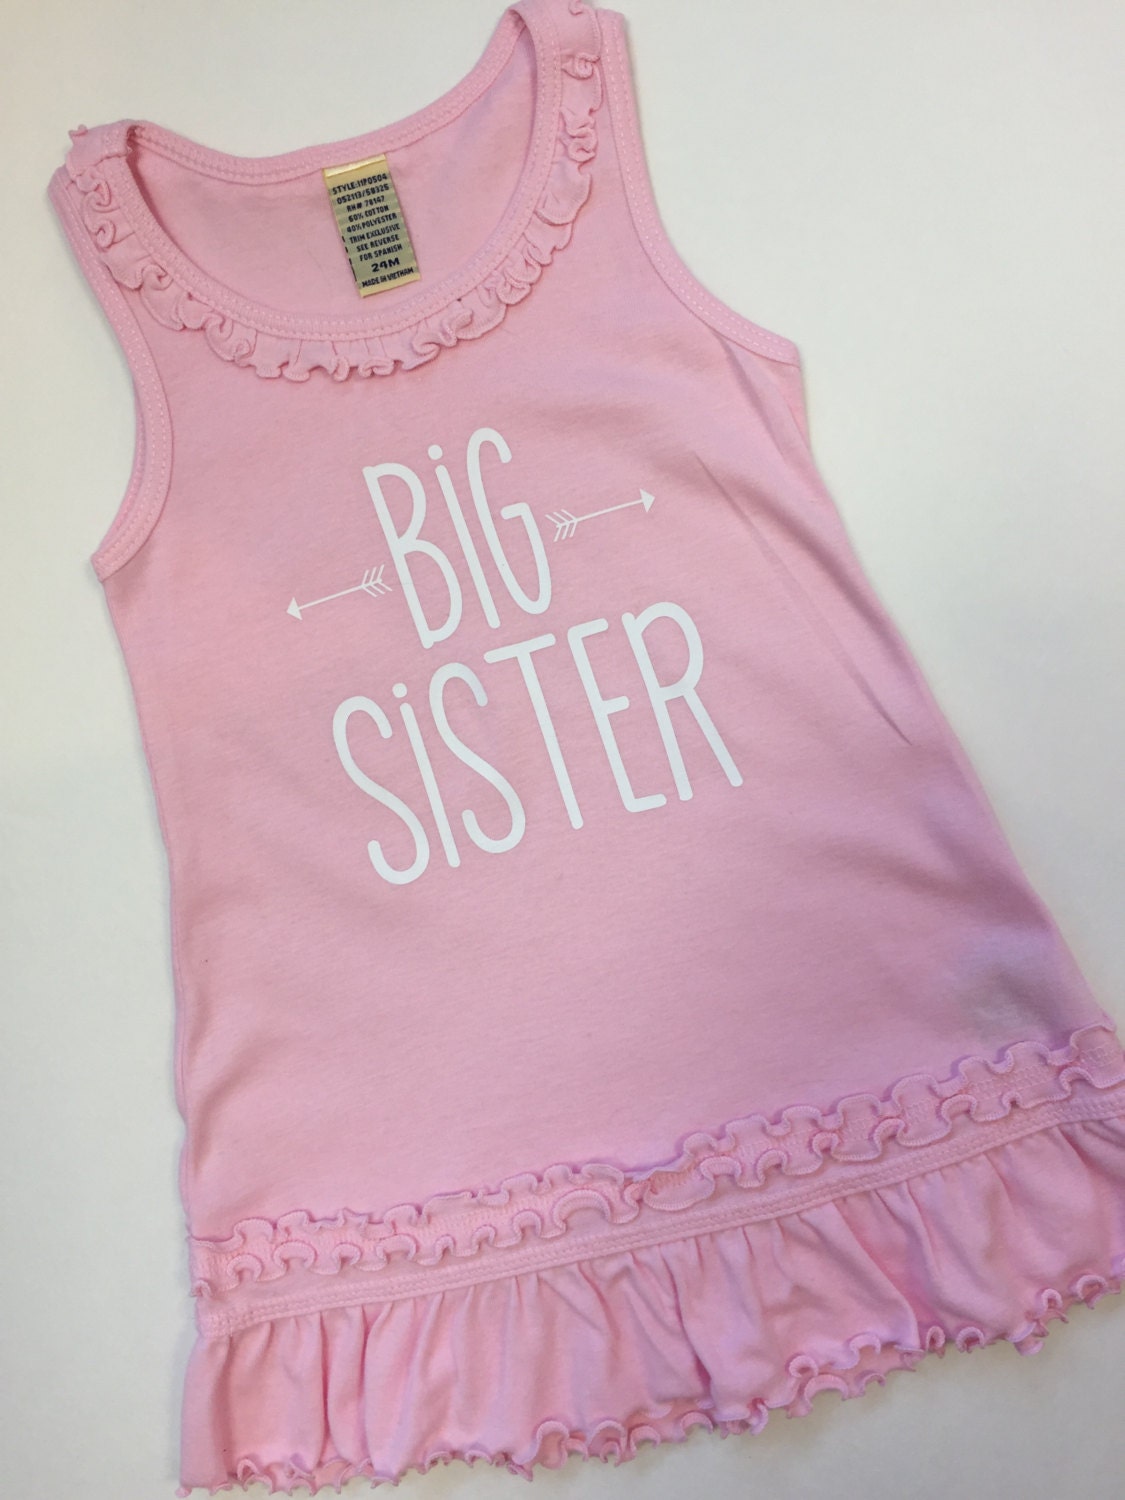 darling big sister dress by aperfecttreasure on Etsy